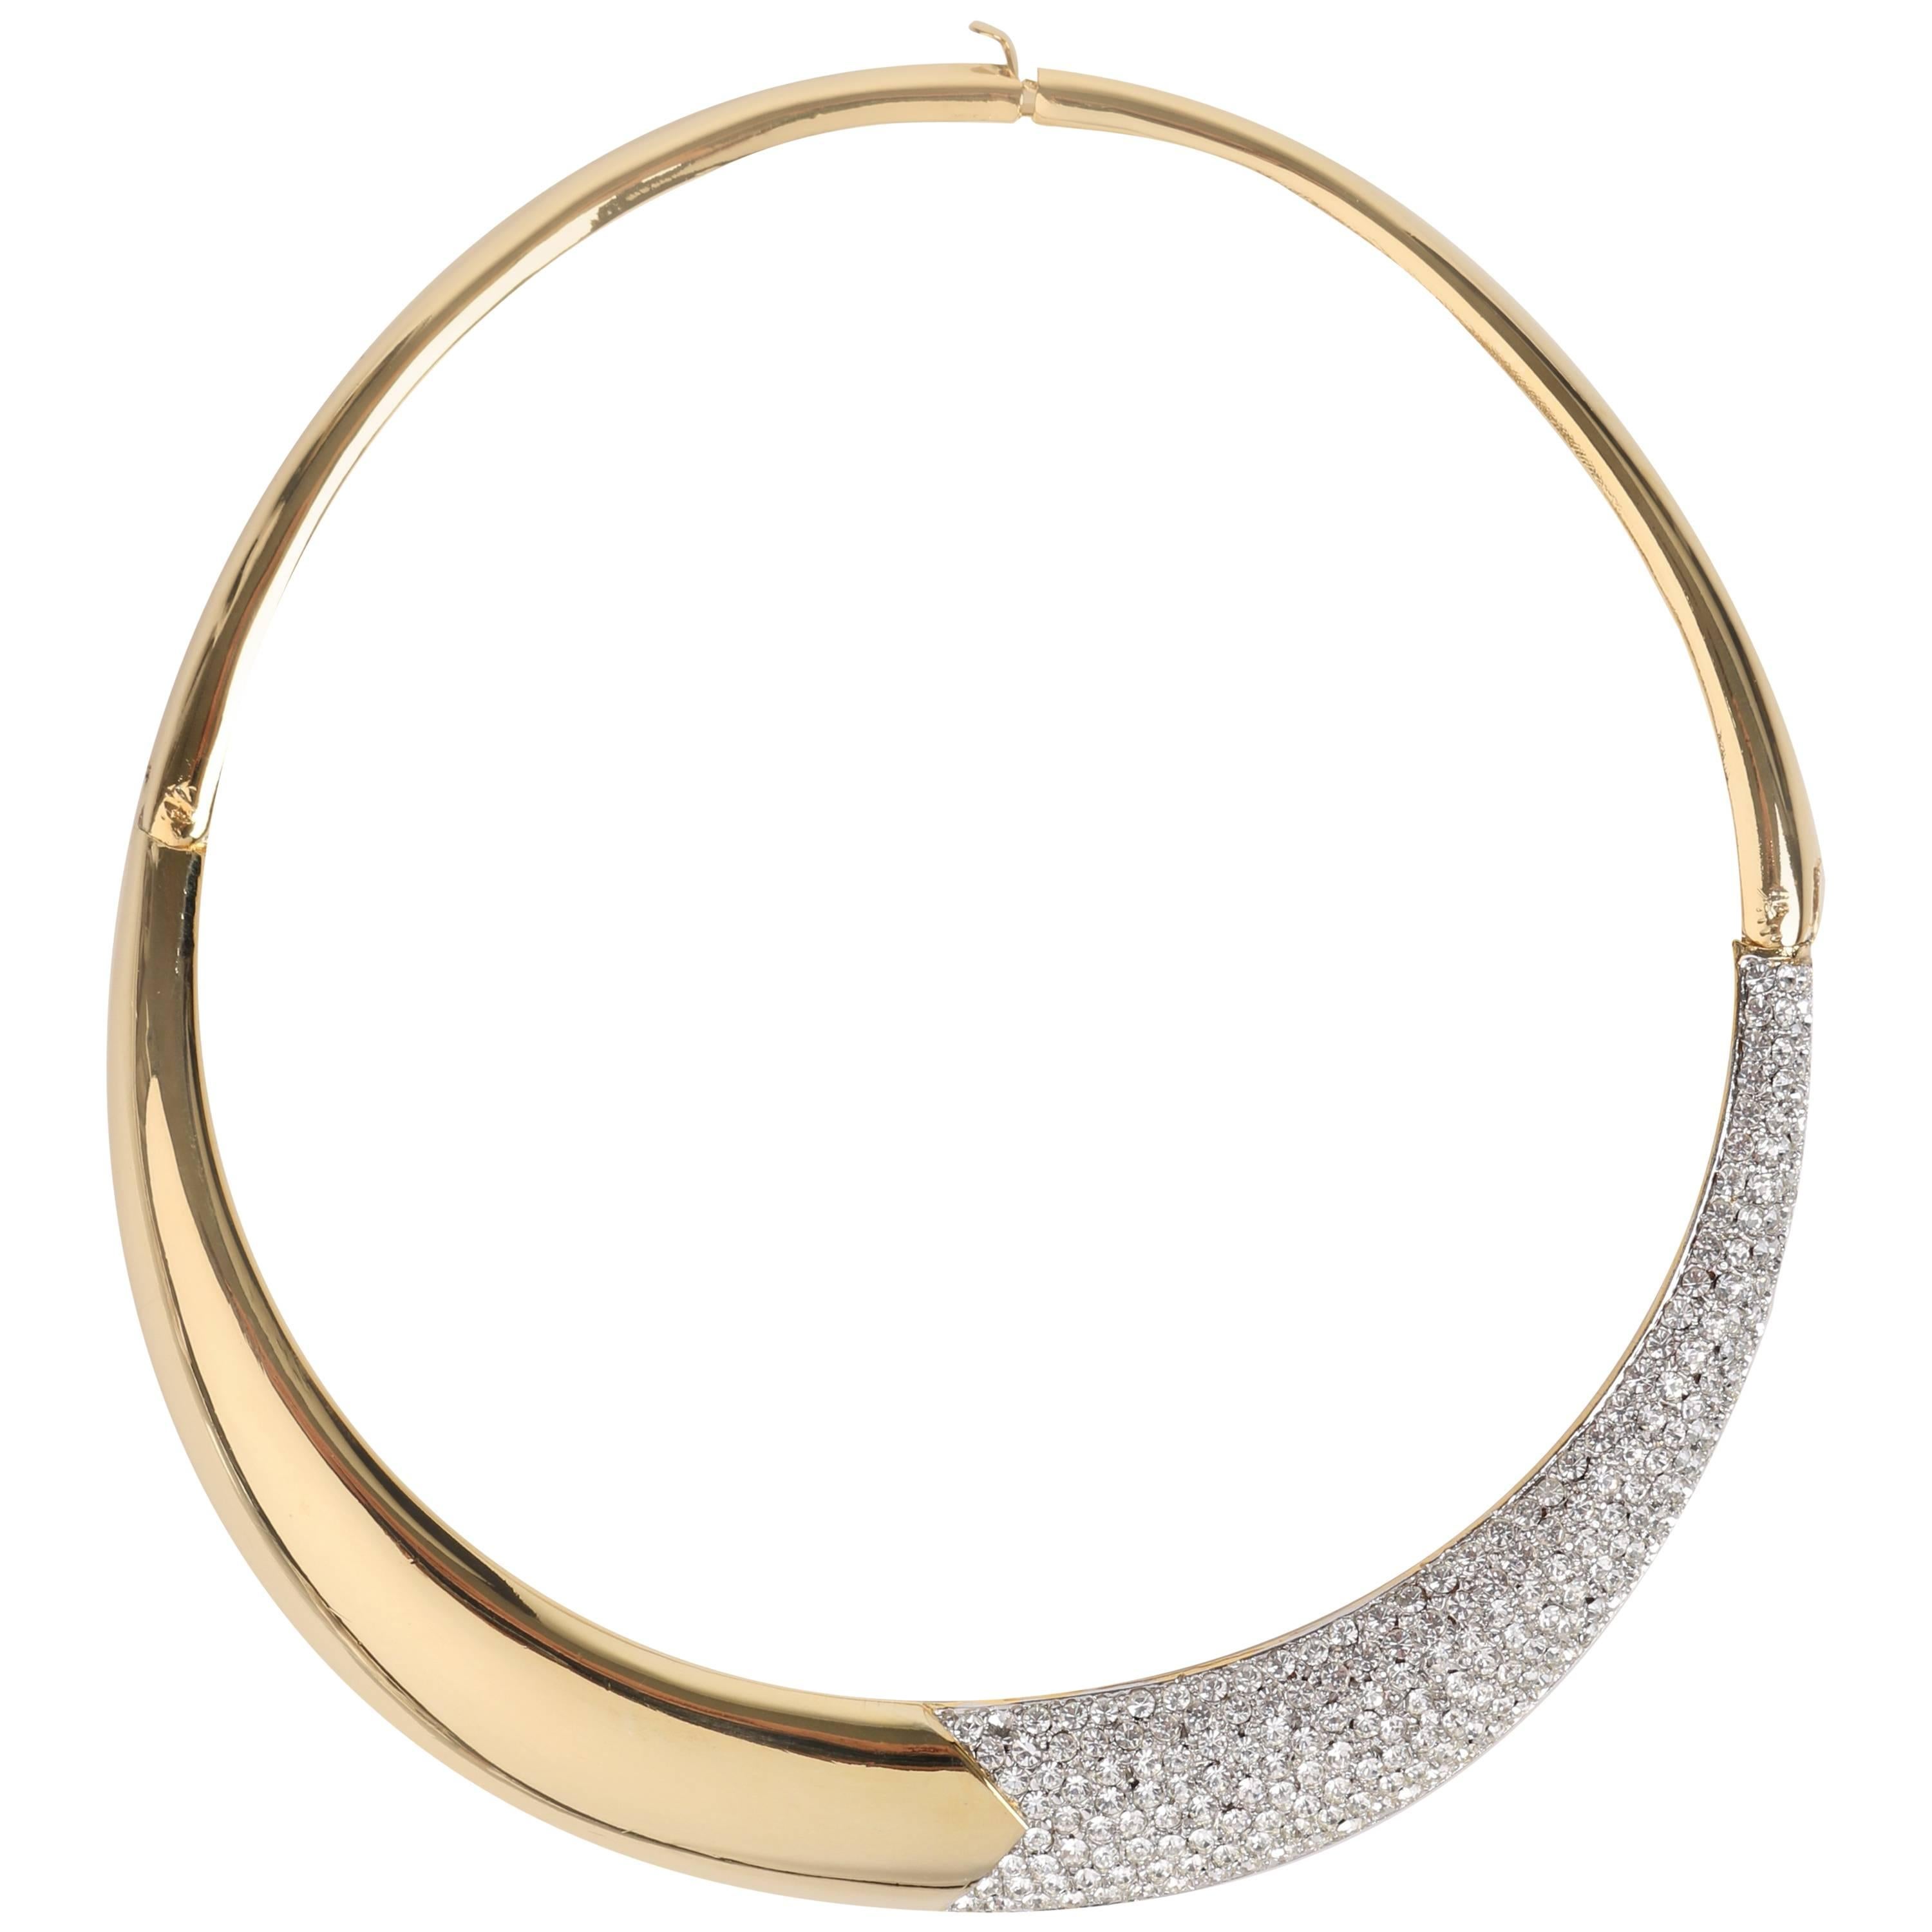 LANVIN c.1970's Gold & Crystal Rhinestone Modernist Collar Choker Necklace